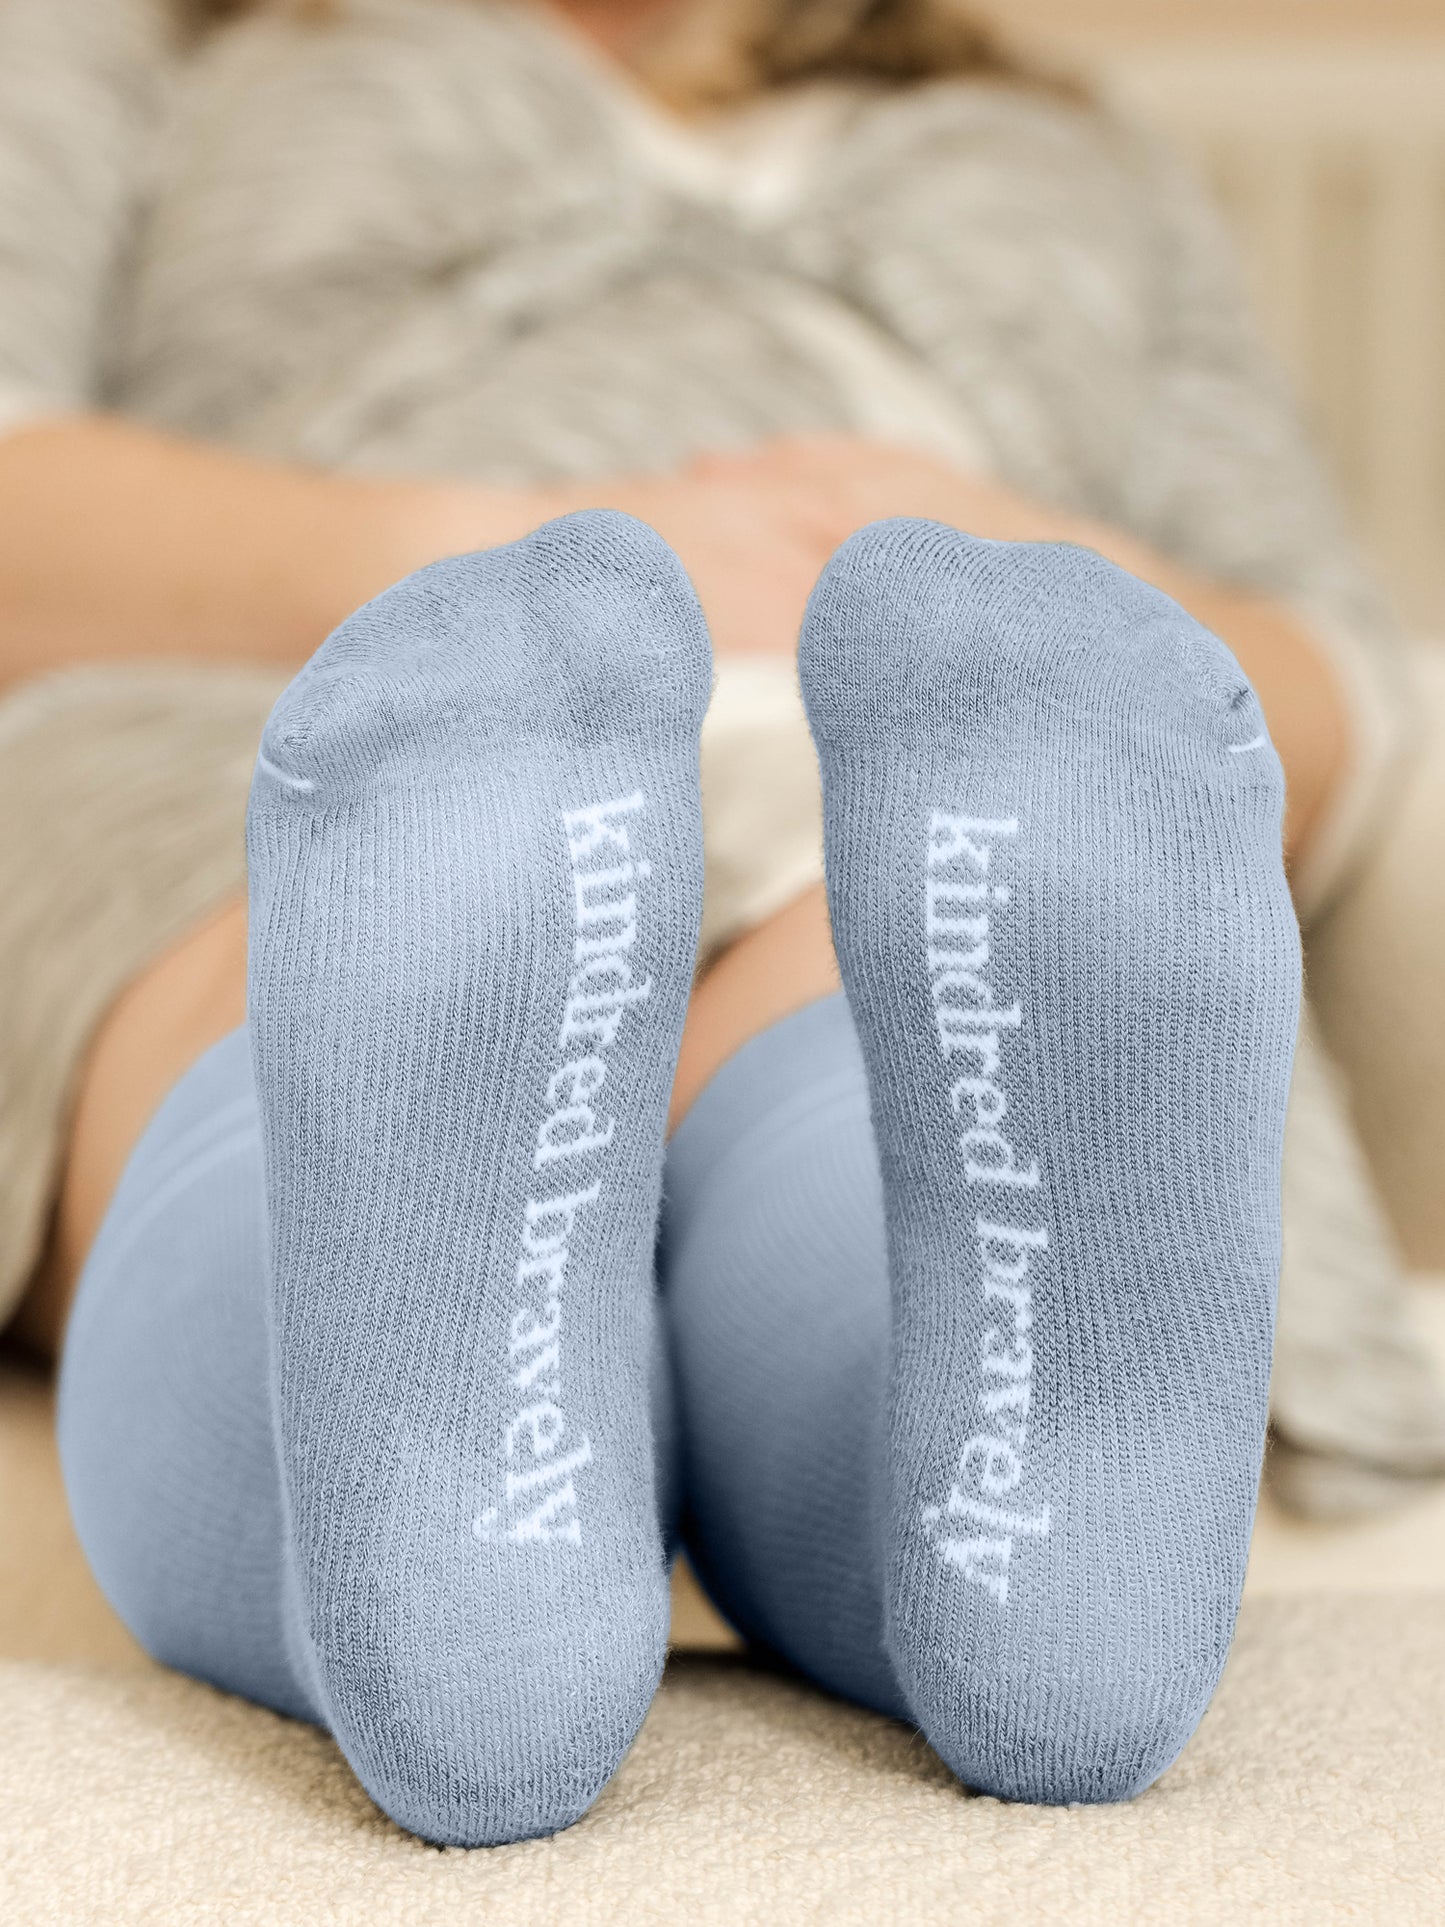 The bottoms of Premium Maternity Compression Socks in Stone Blue 